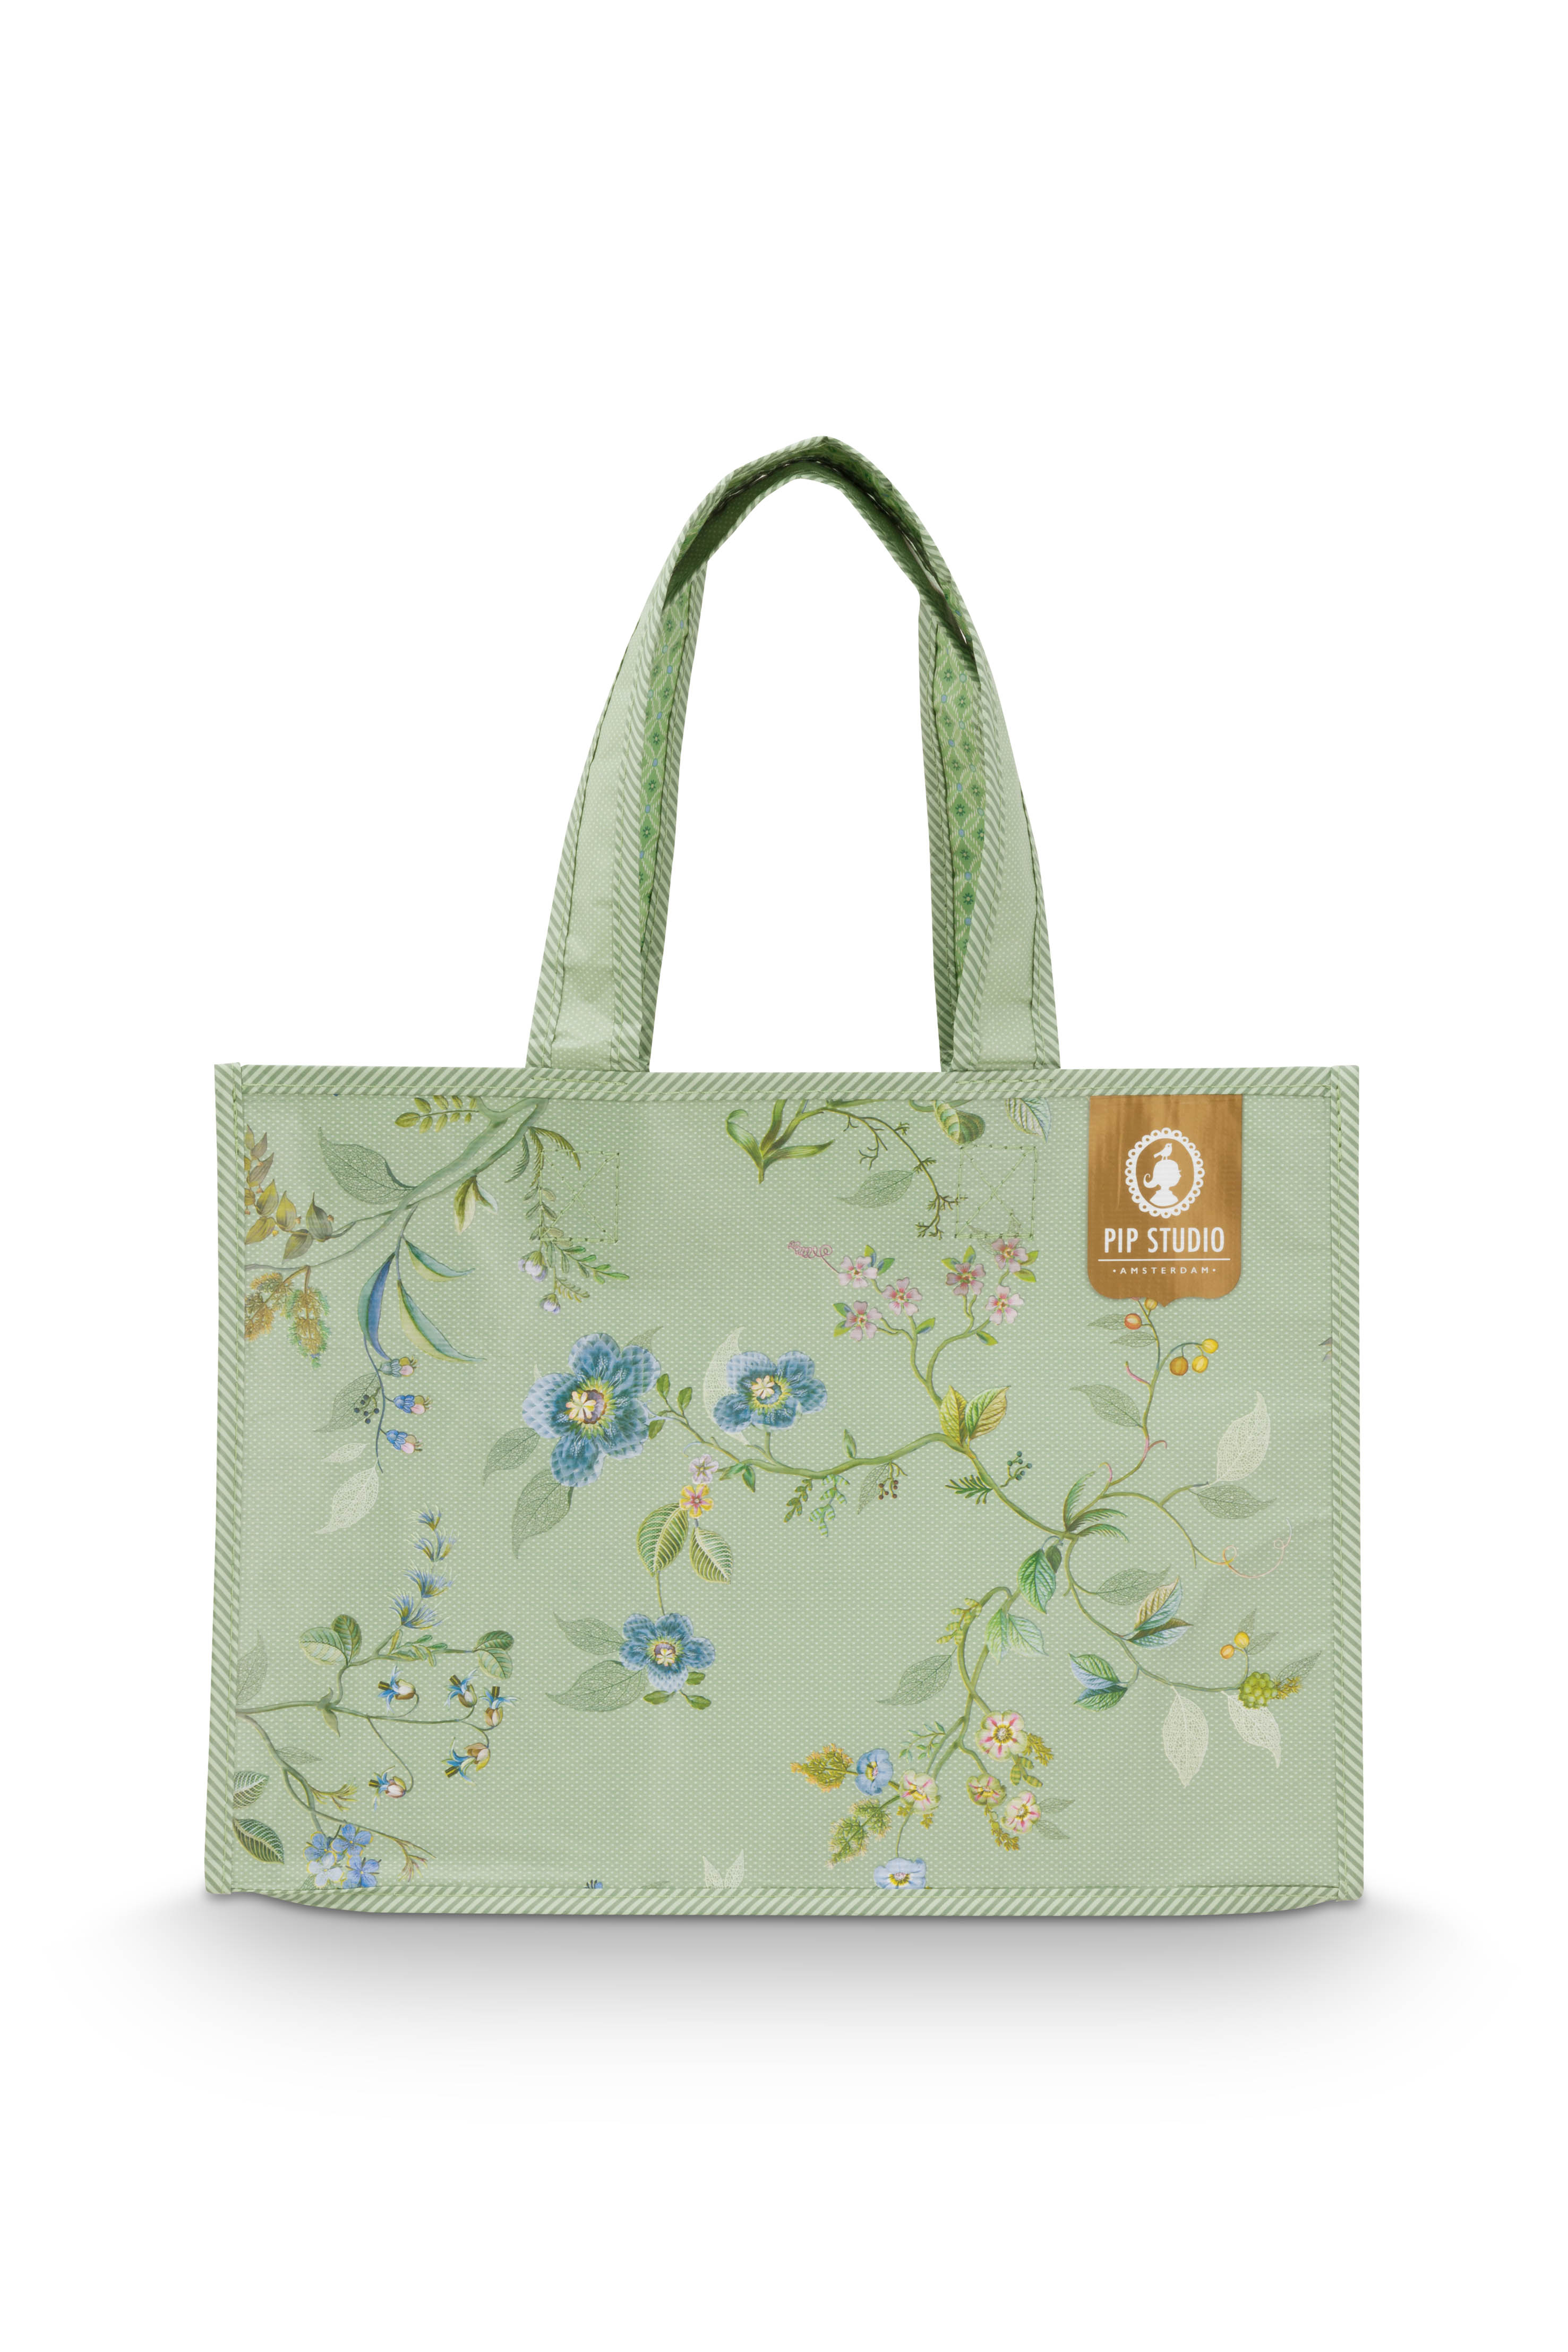 Promotional Bag Sml Kawai Flower Green Gift